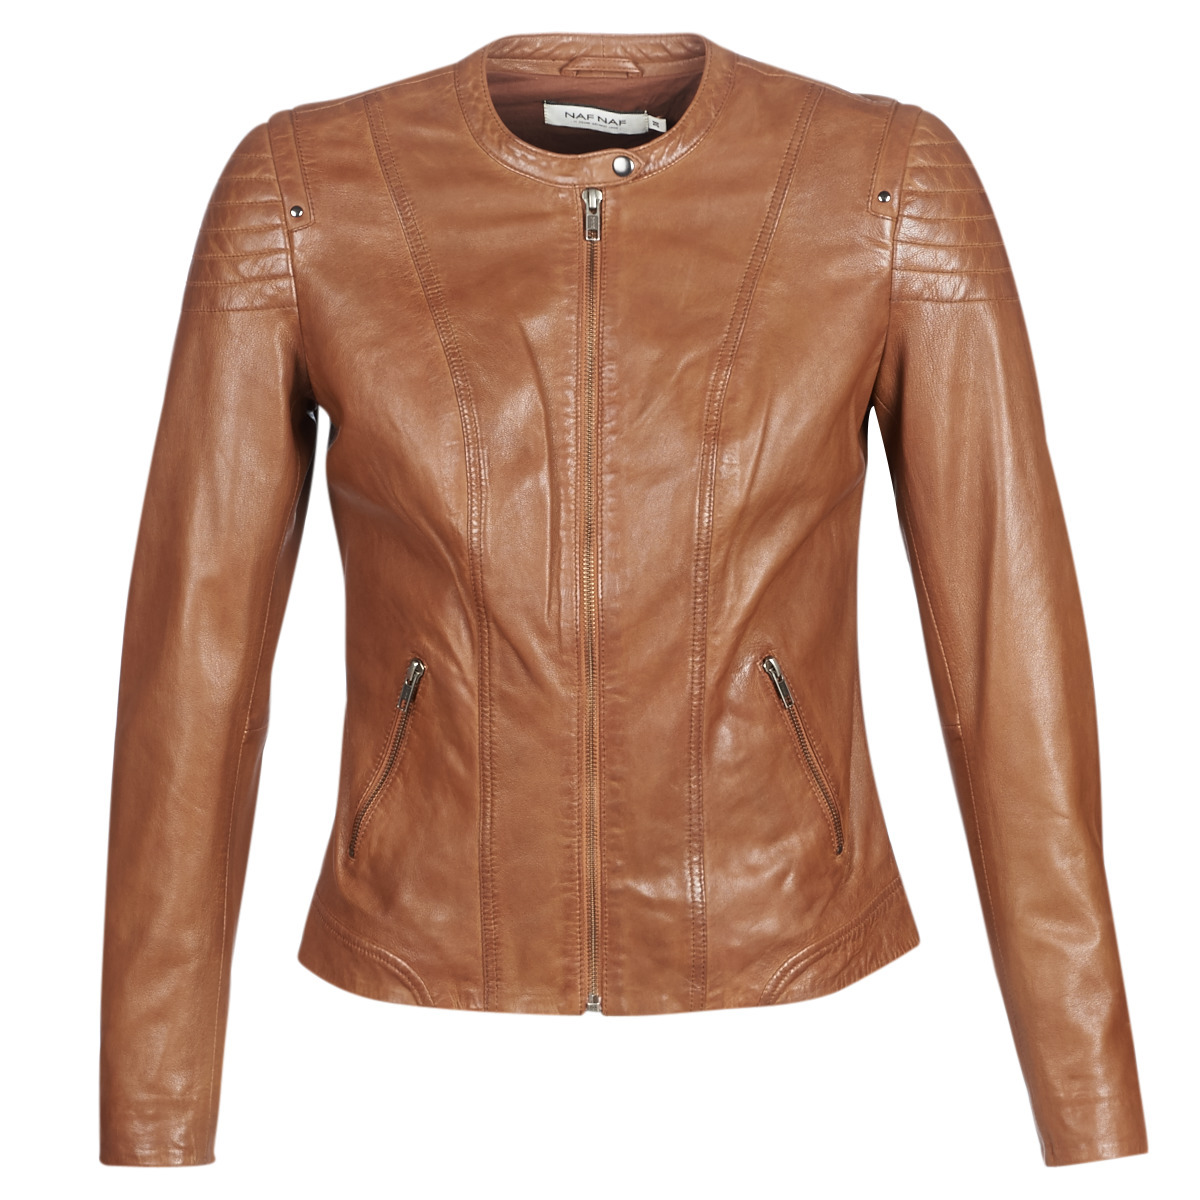 Spartoo - Woman Leather Jacket in Brown by Naf Naf GOOFASH